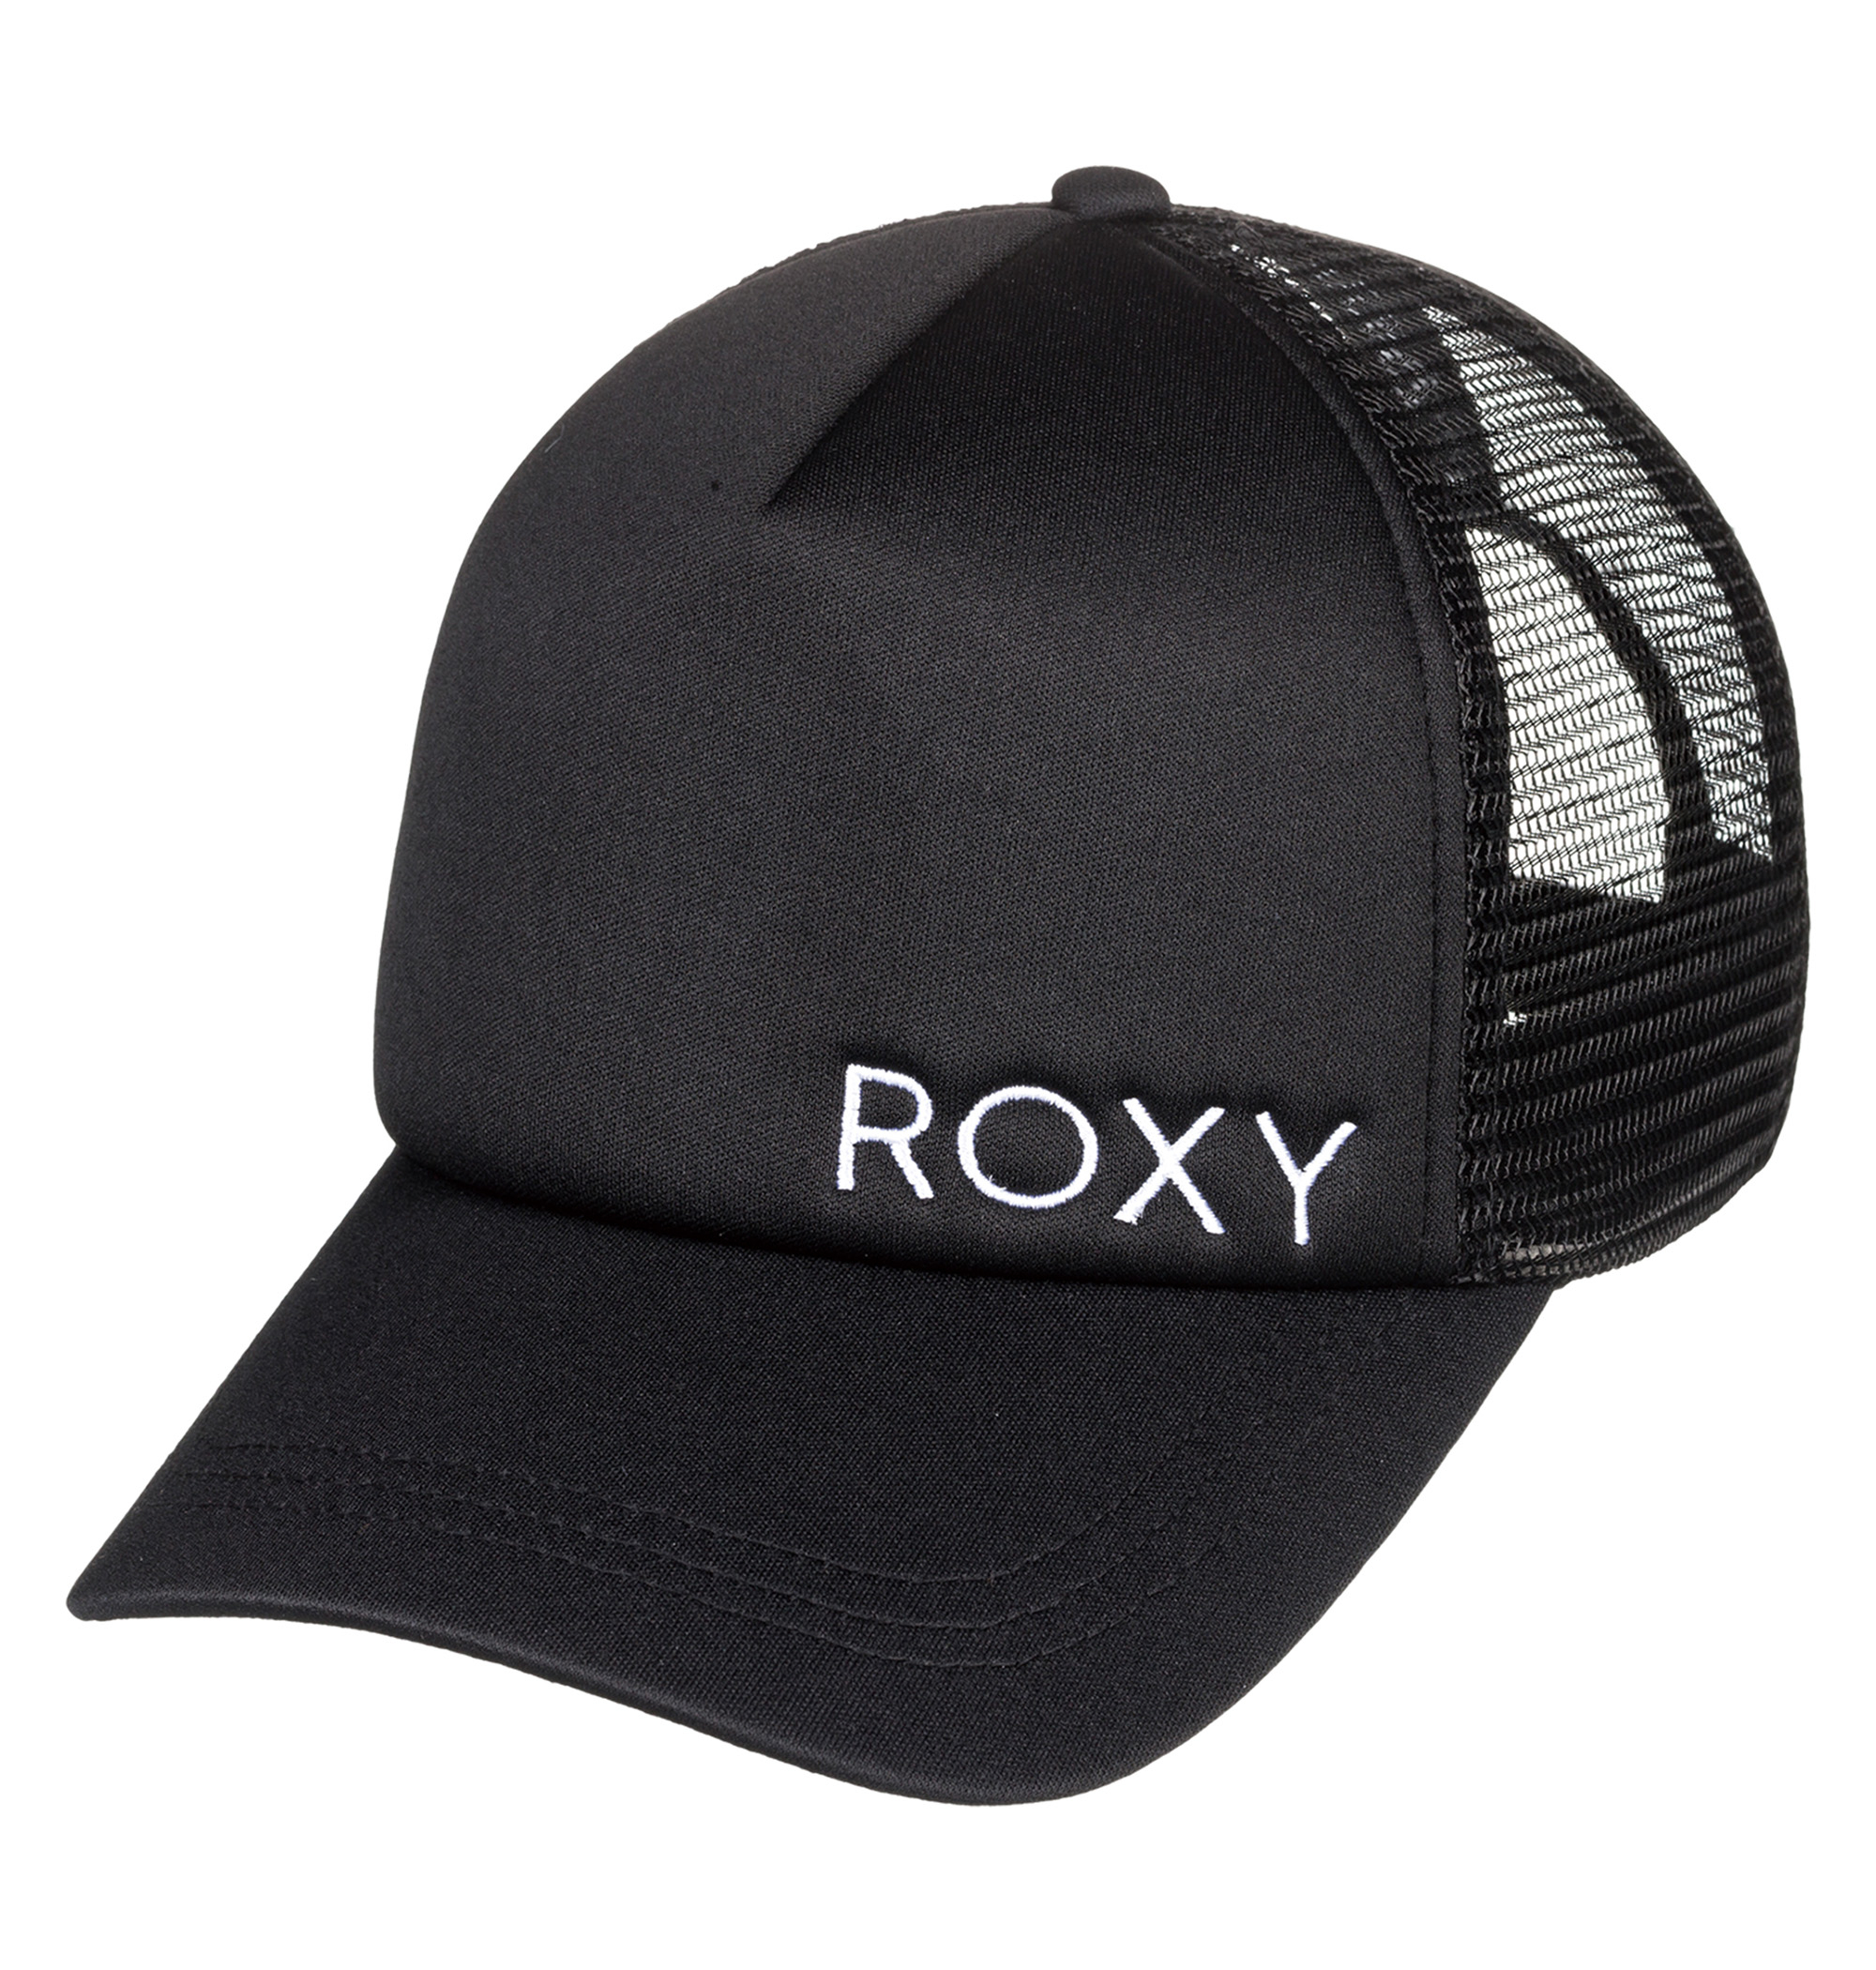 ＜Roxy＞FINISHLINE 2 BLACK 程よくカジュアル感を漂わせるブランドロゴがアクセントになったキャップ